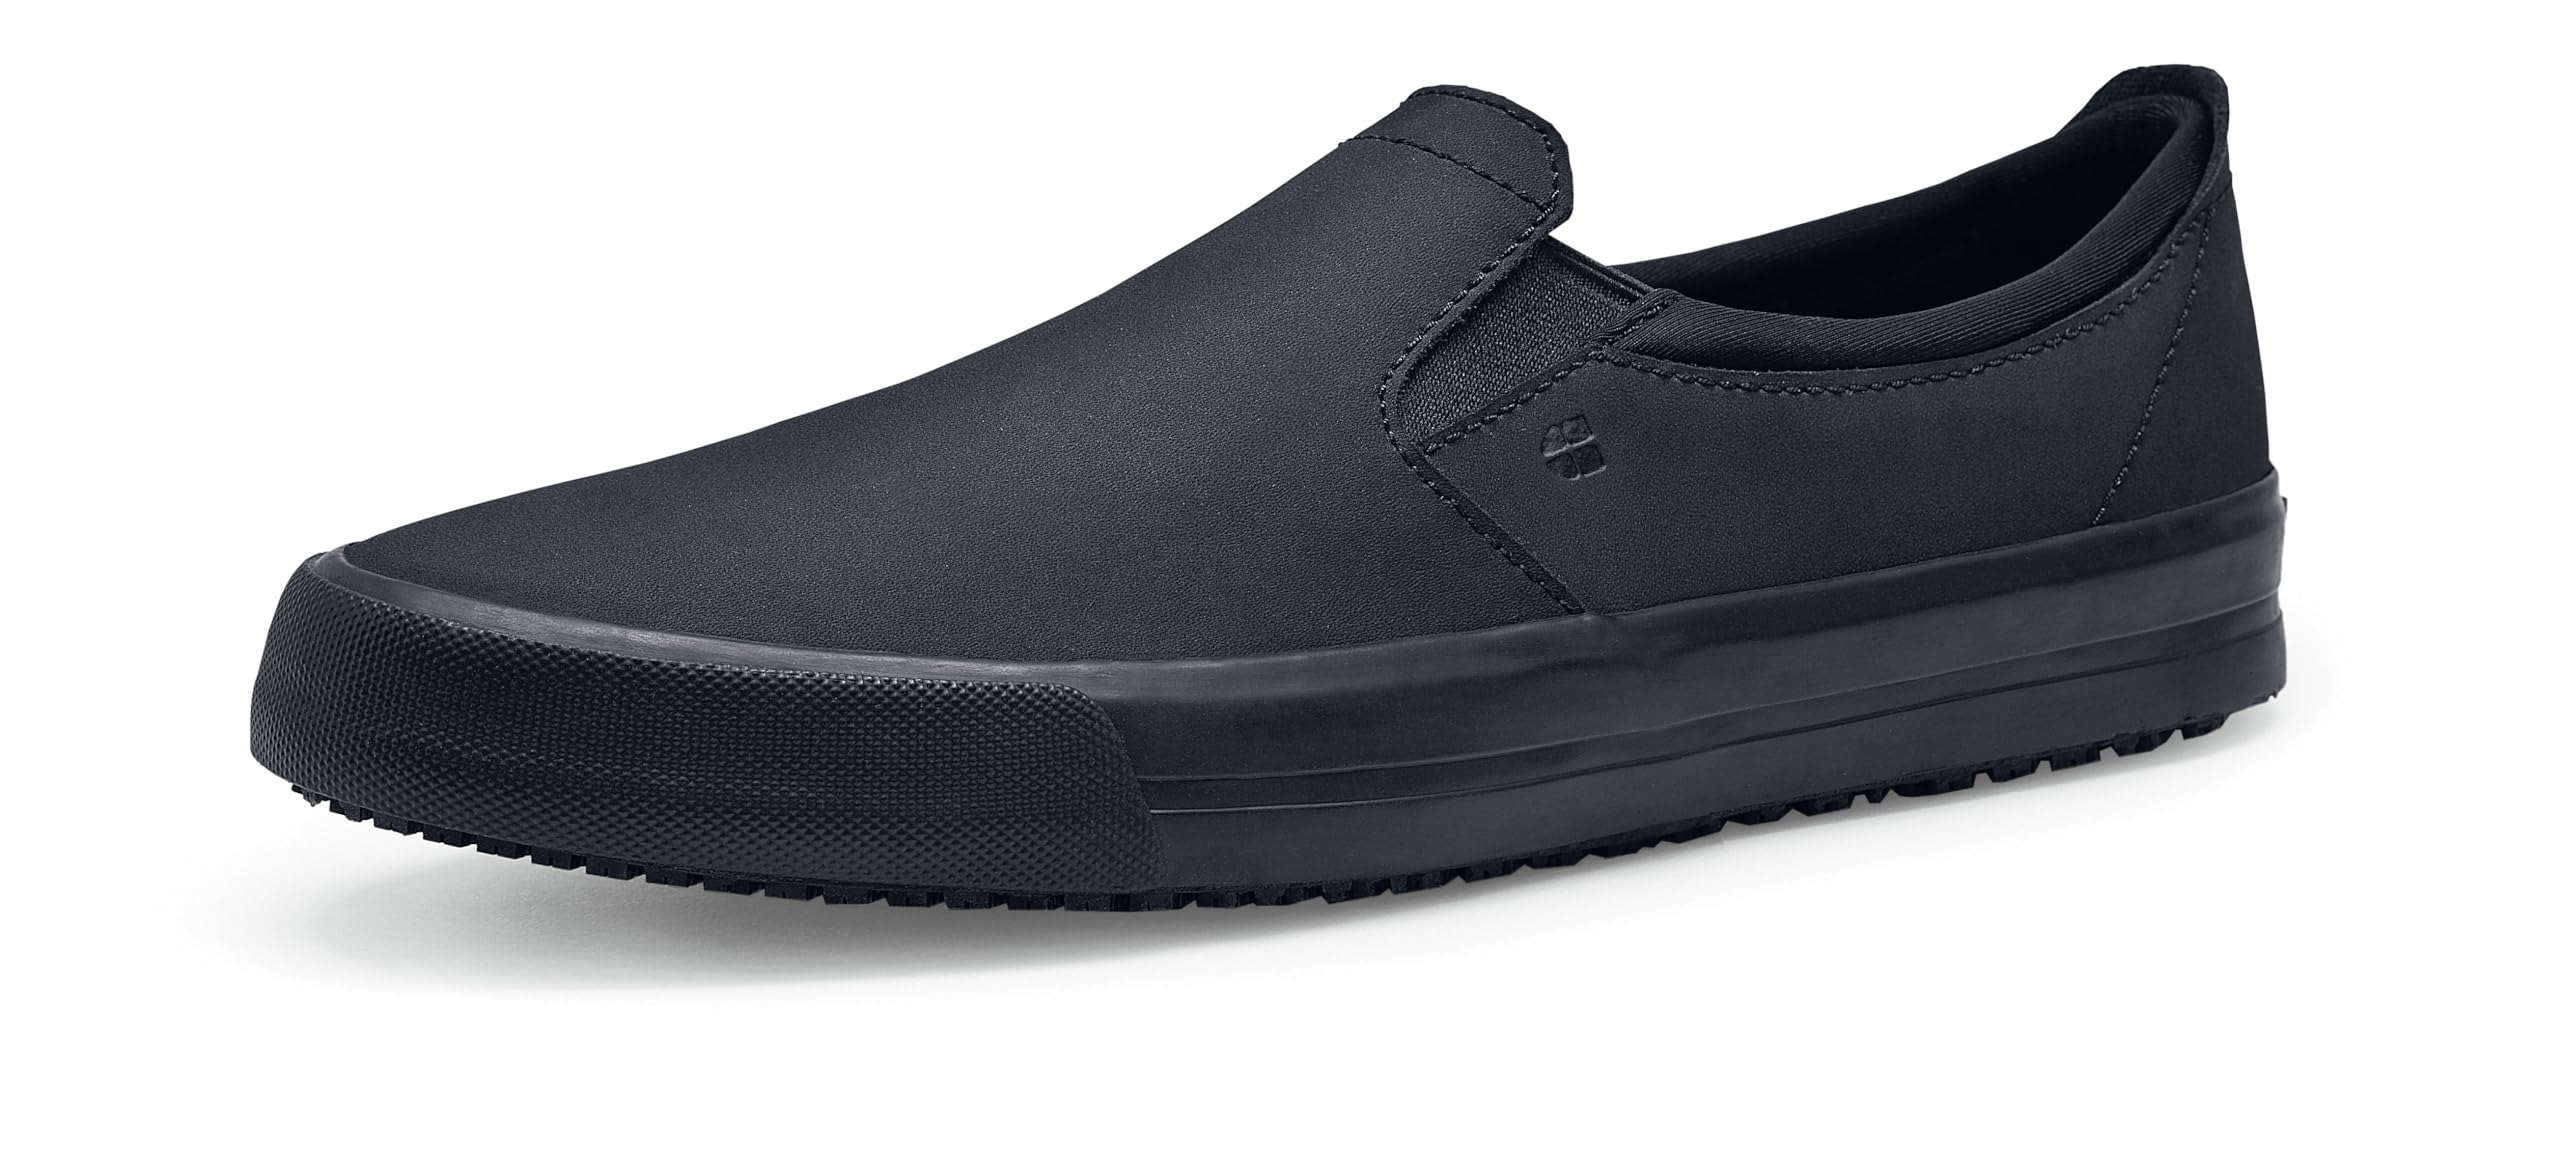 Shoes for Crews Ollie II, Men's, Women's, Unisex Slip Resistant Work Shoes, Water Resistant Slip-On Sneakers, Red or Black